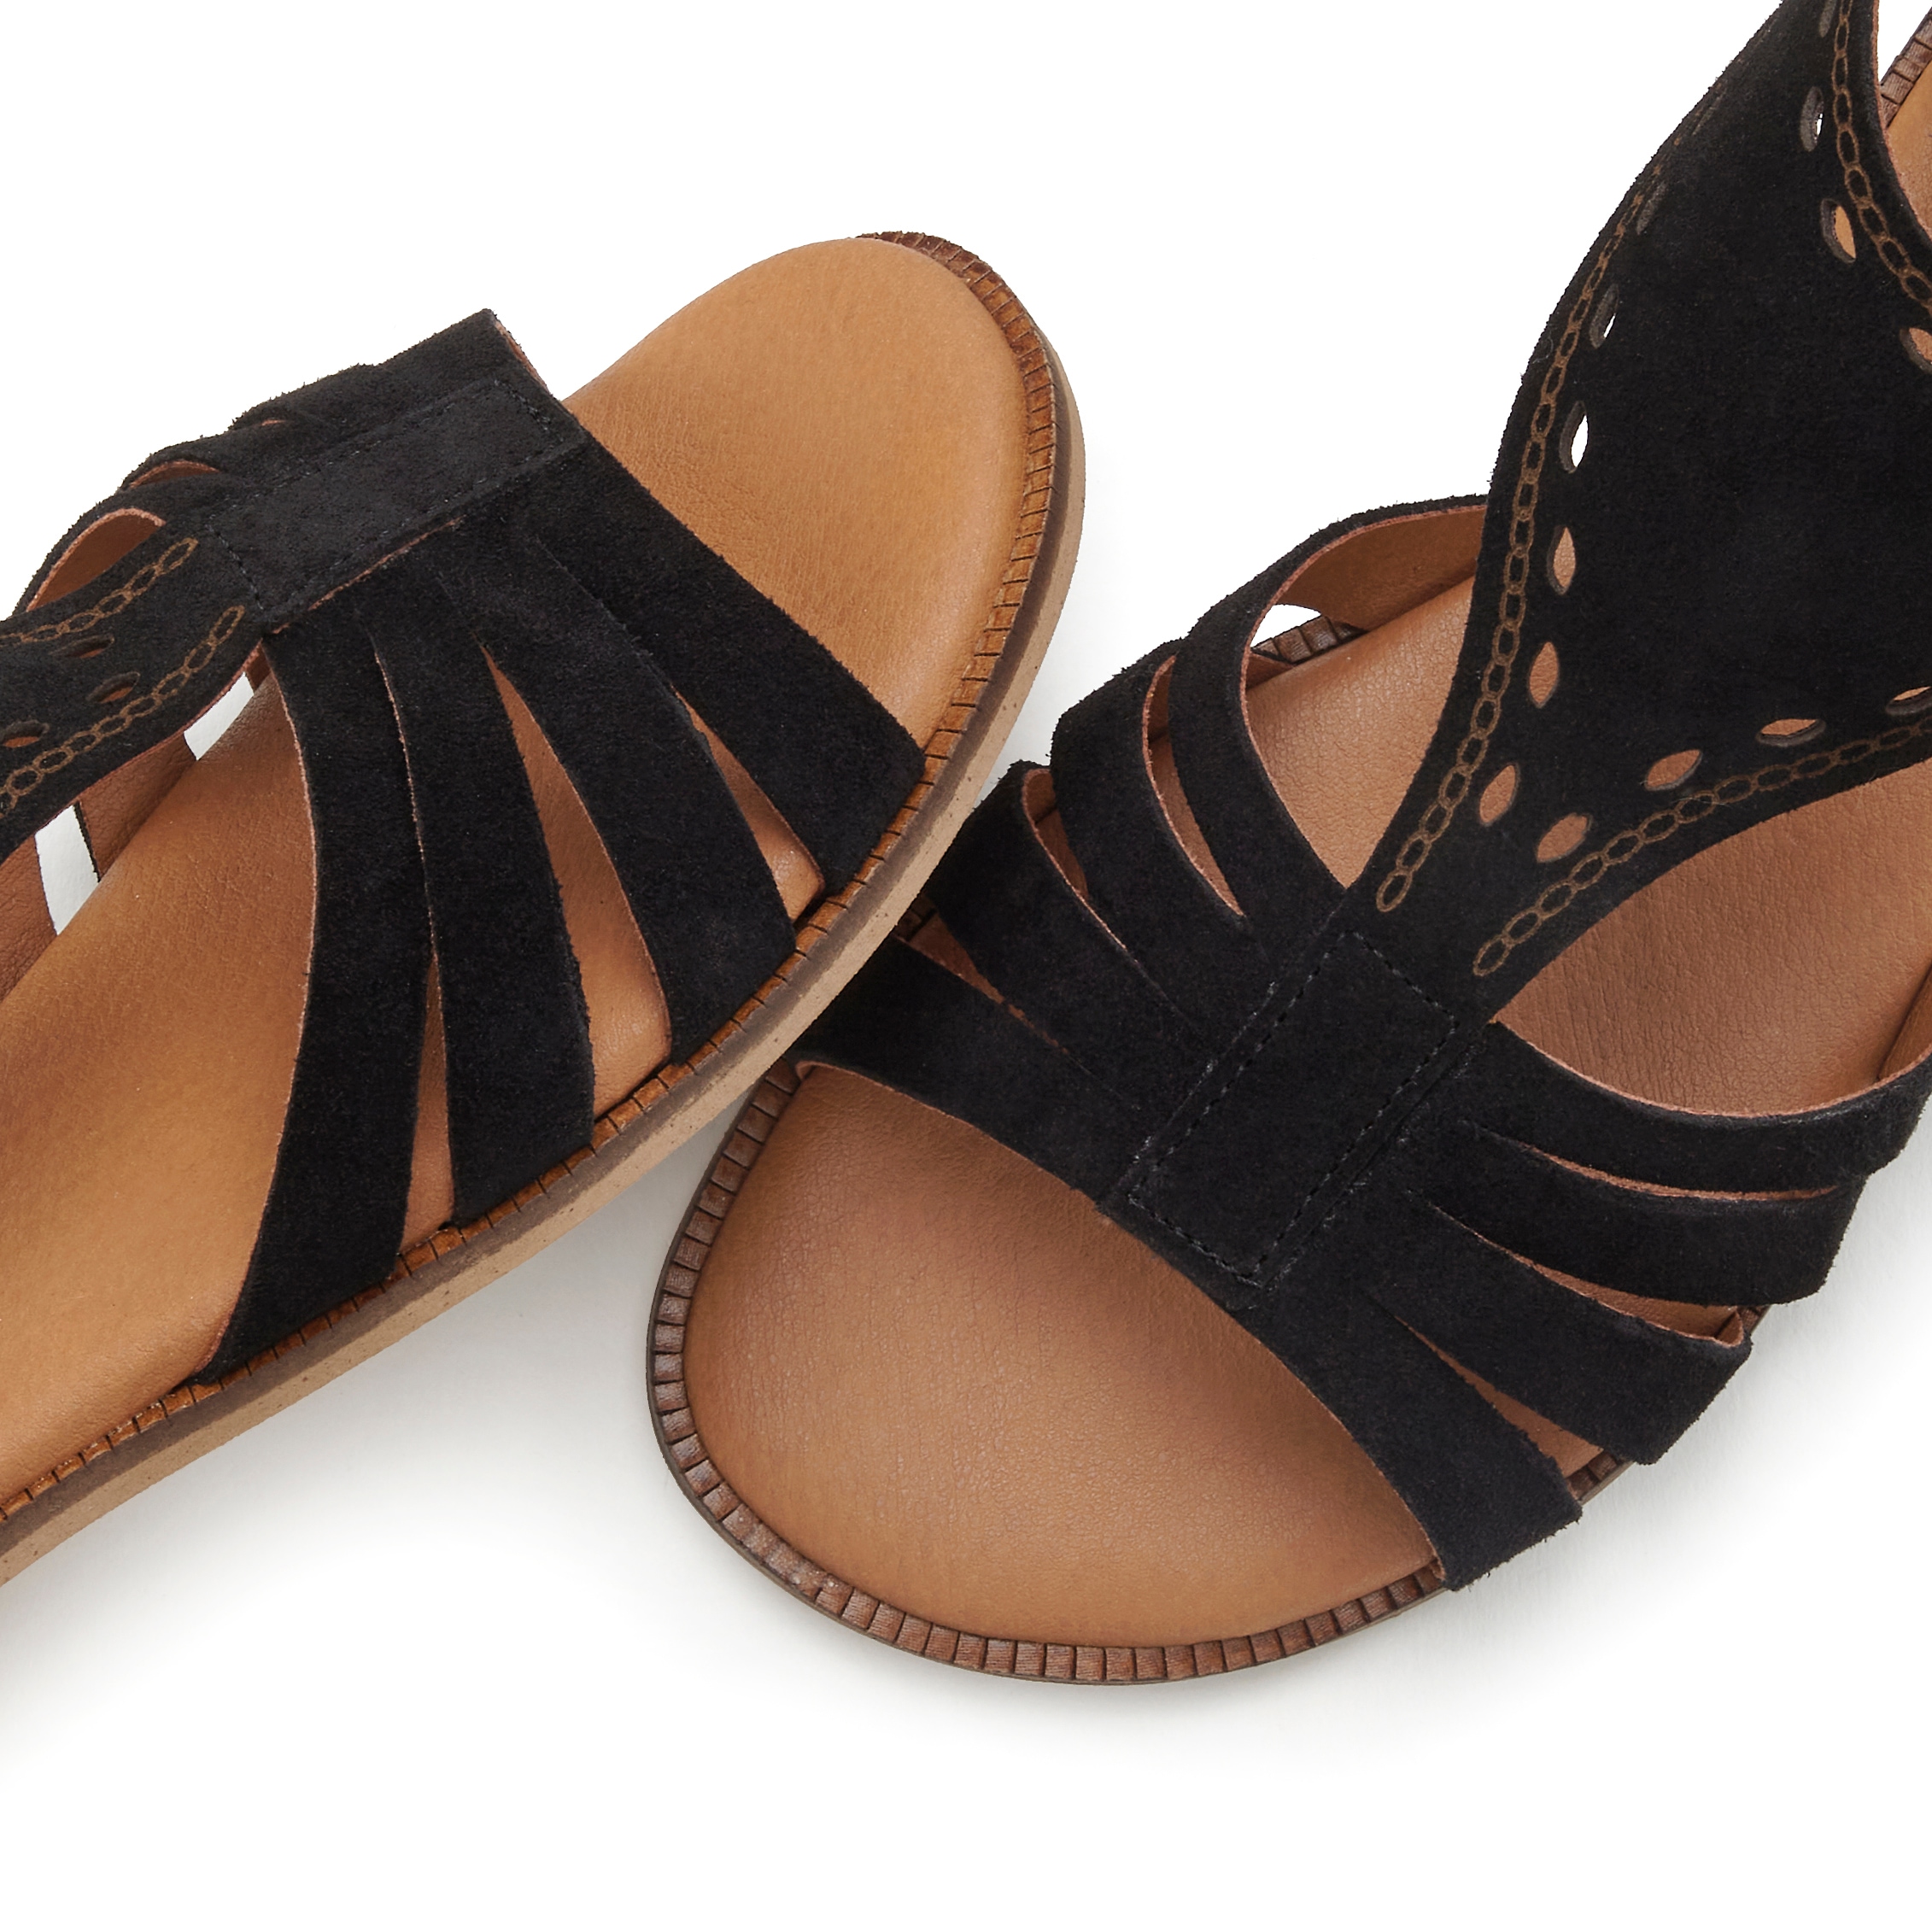 LASCANA Sandale, Sandalette, Sommerschuh aus hochwertigem Leder mit kleinen Cut-Outs